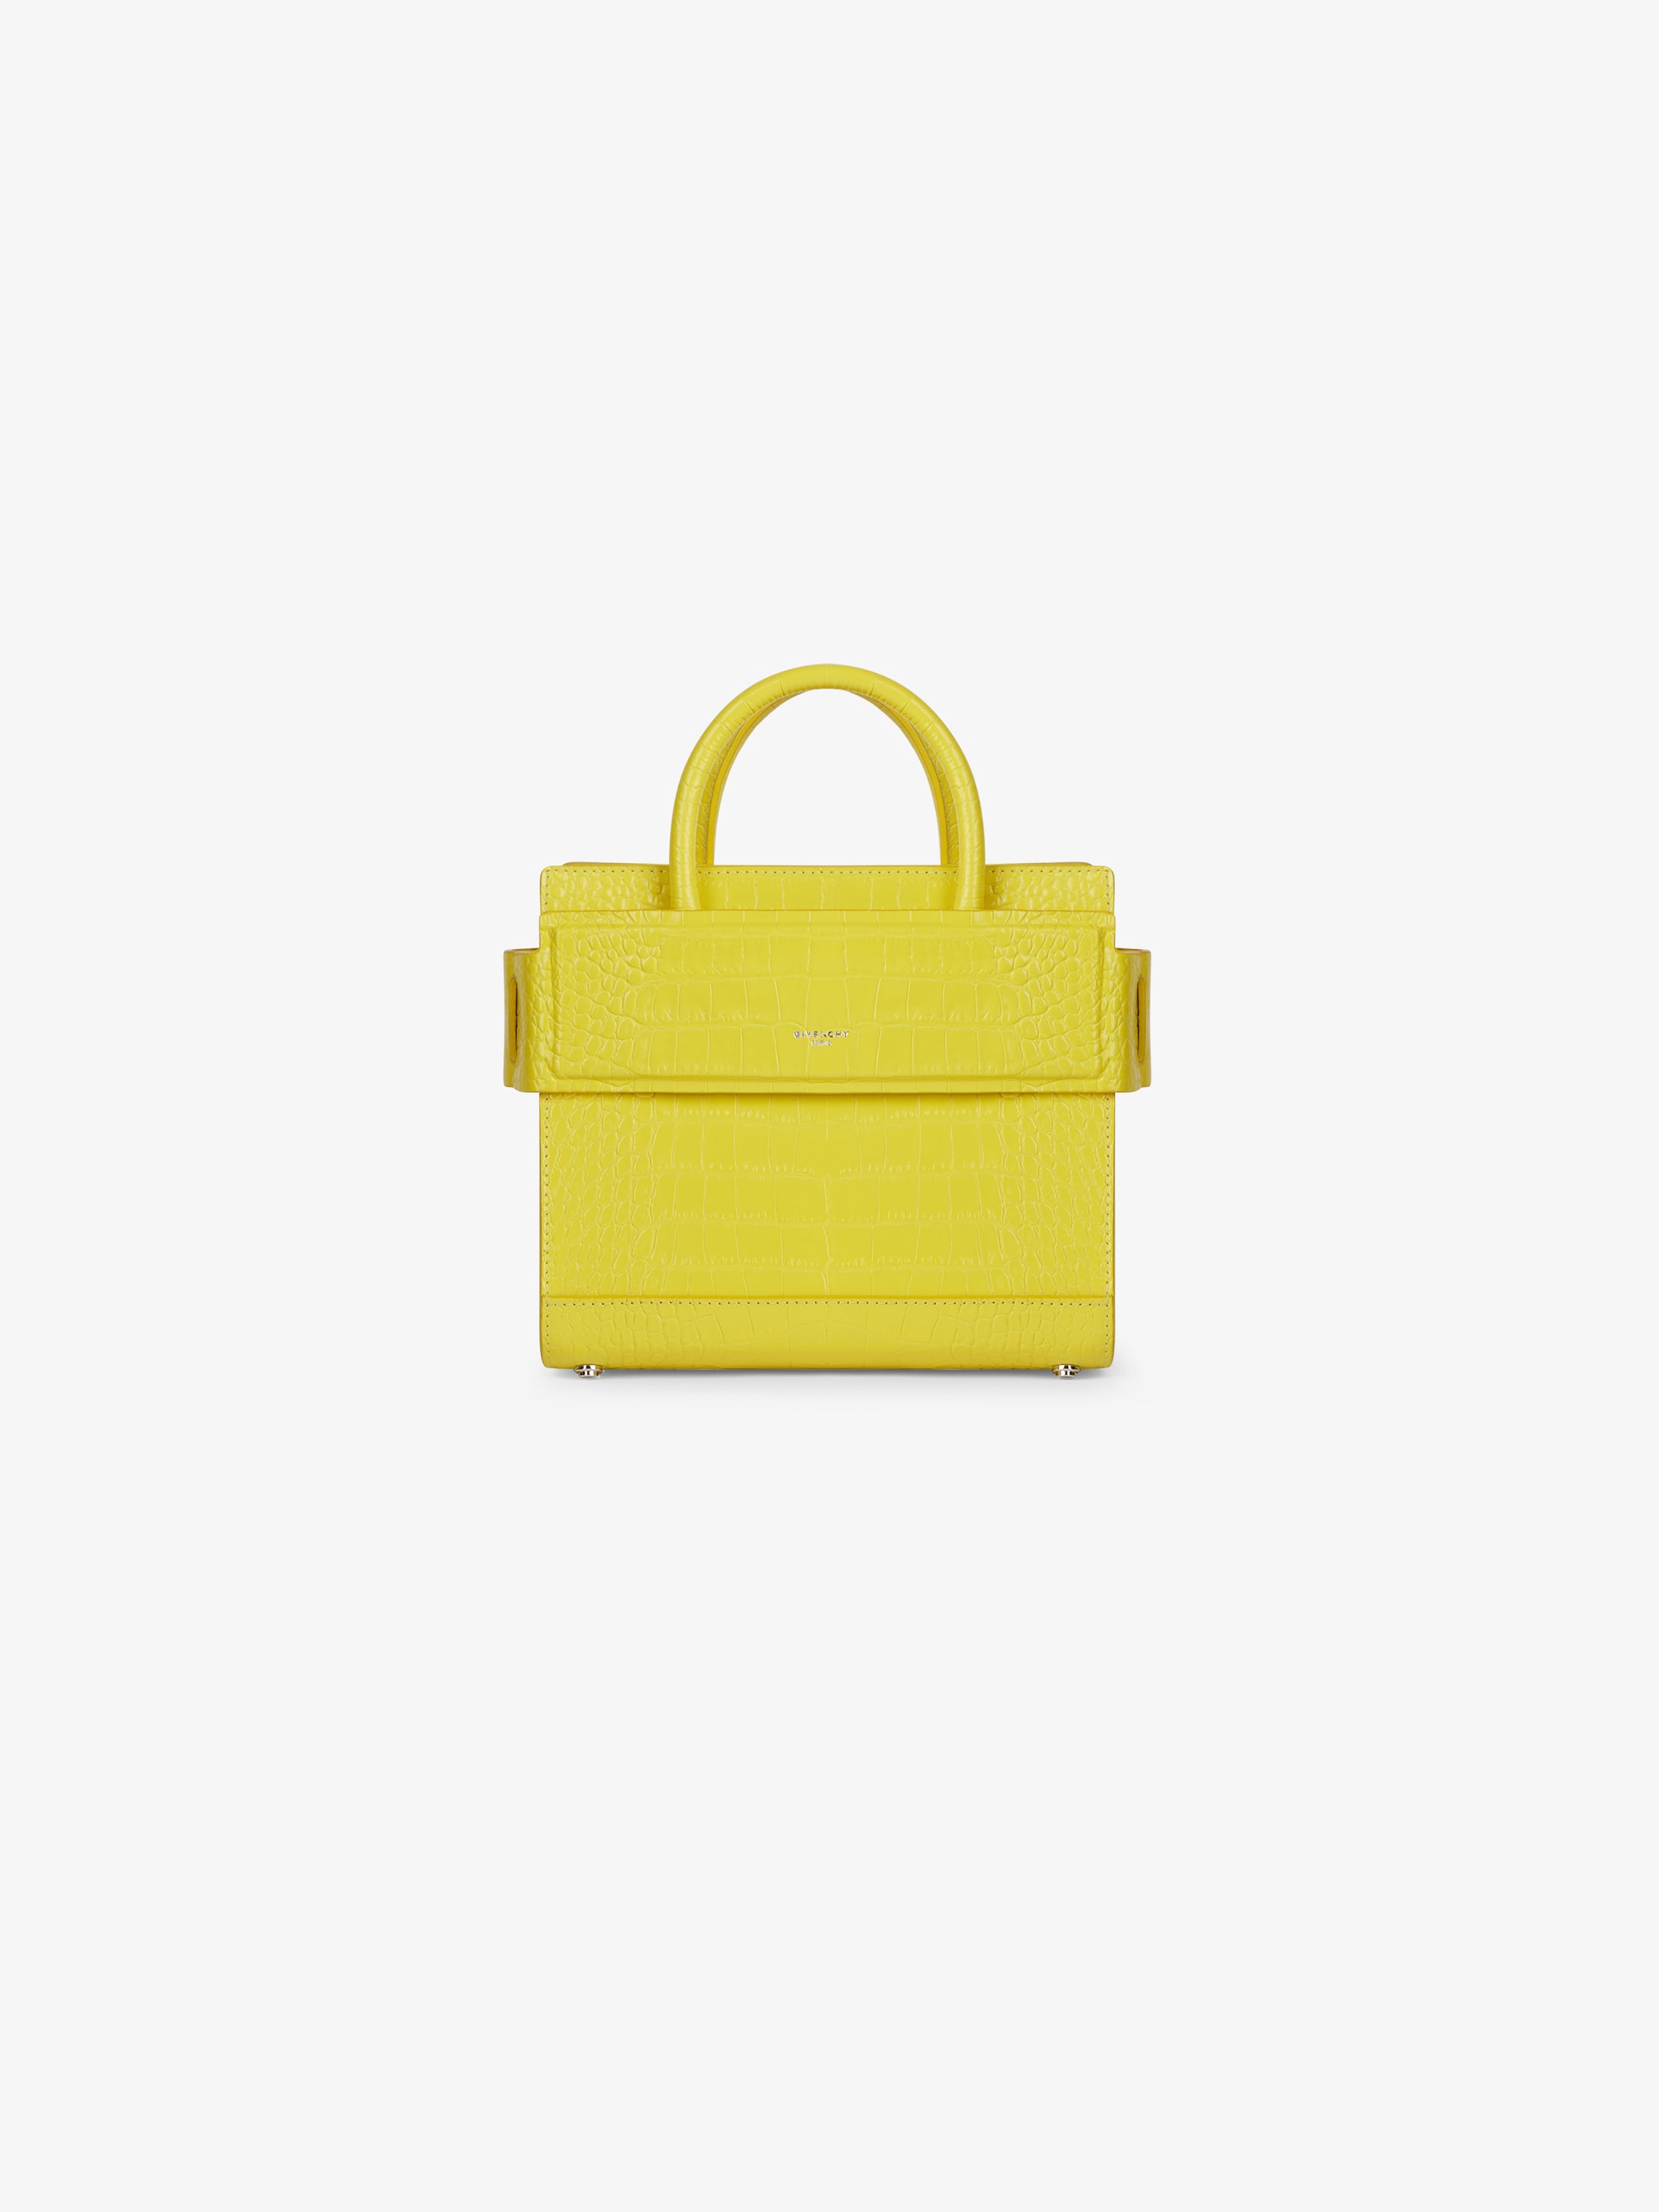 givenchy yellow bag